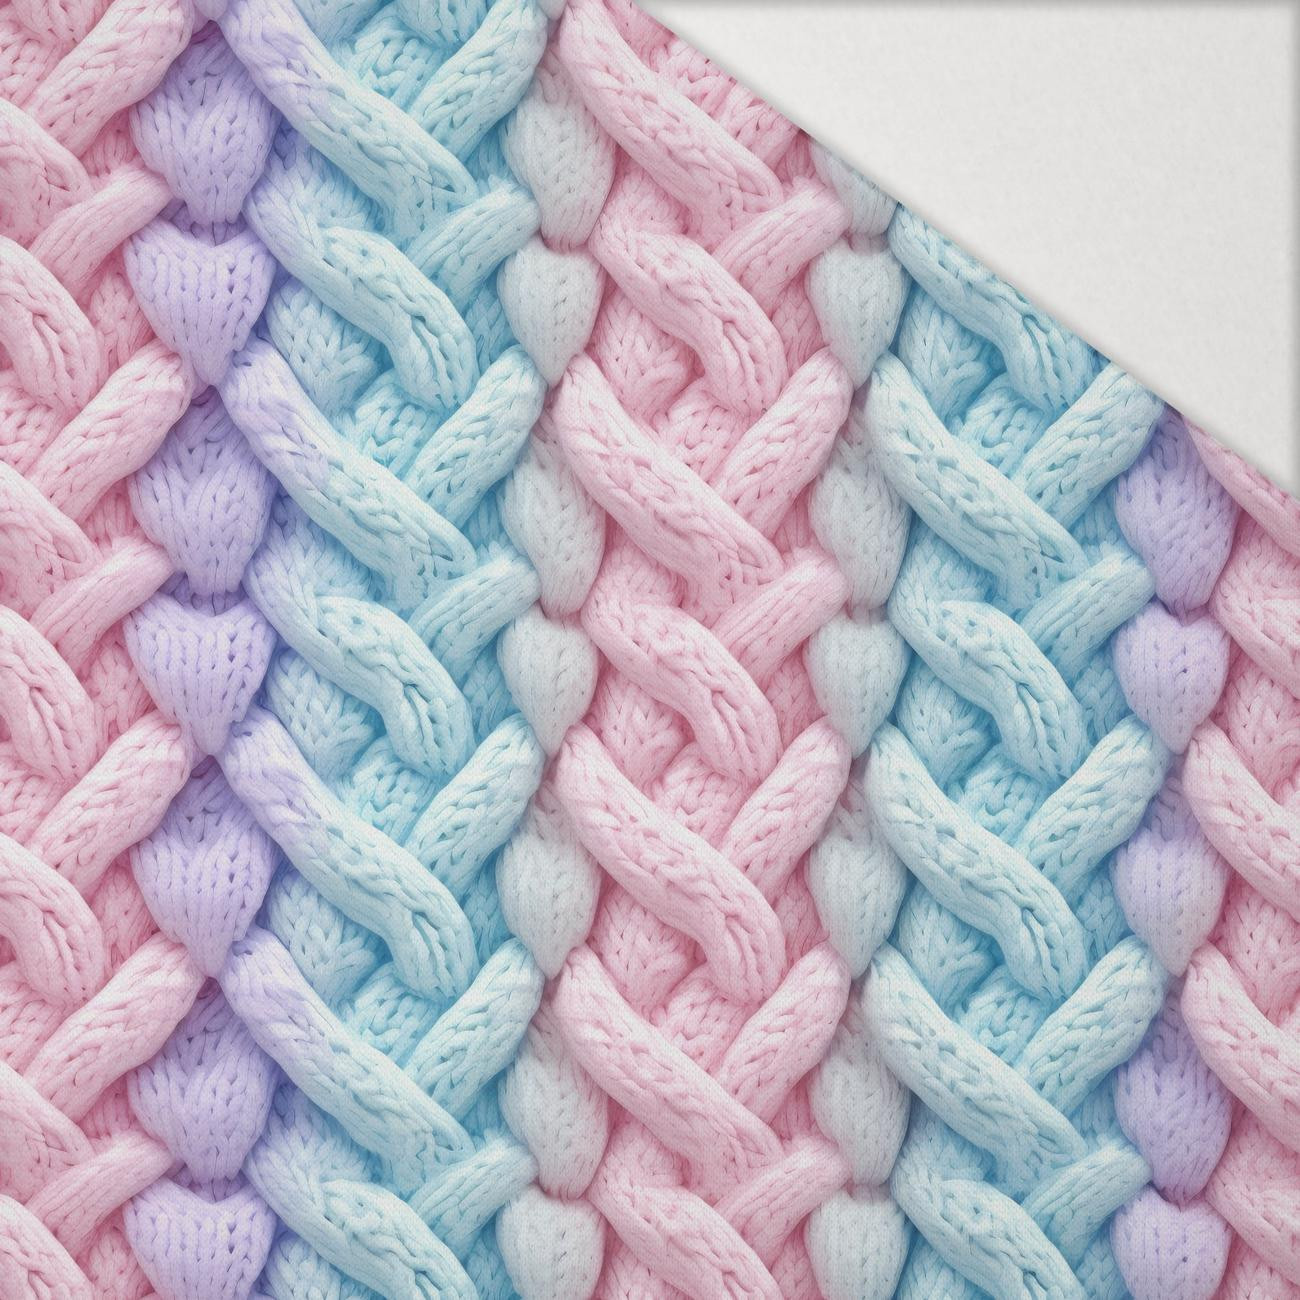 IMITATION PASTEL SWEATER PAT. 3 - Hydrophobic brushed knit